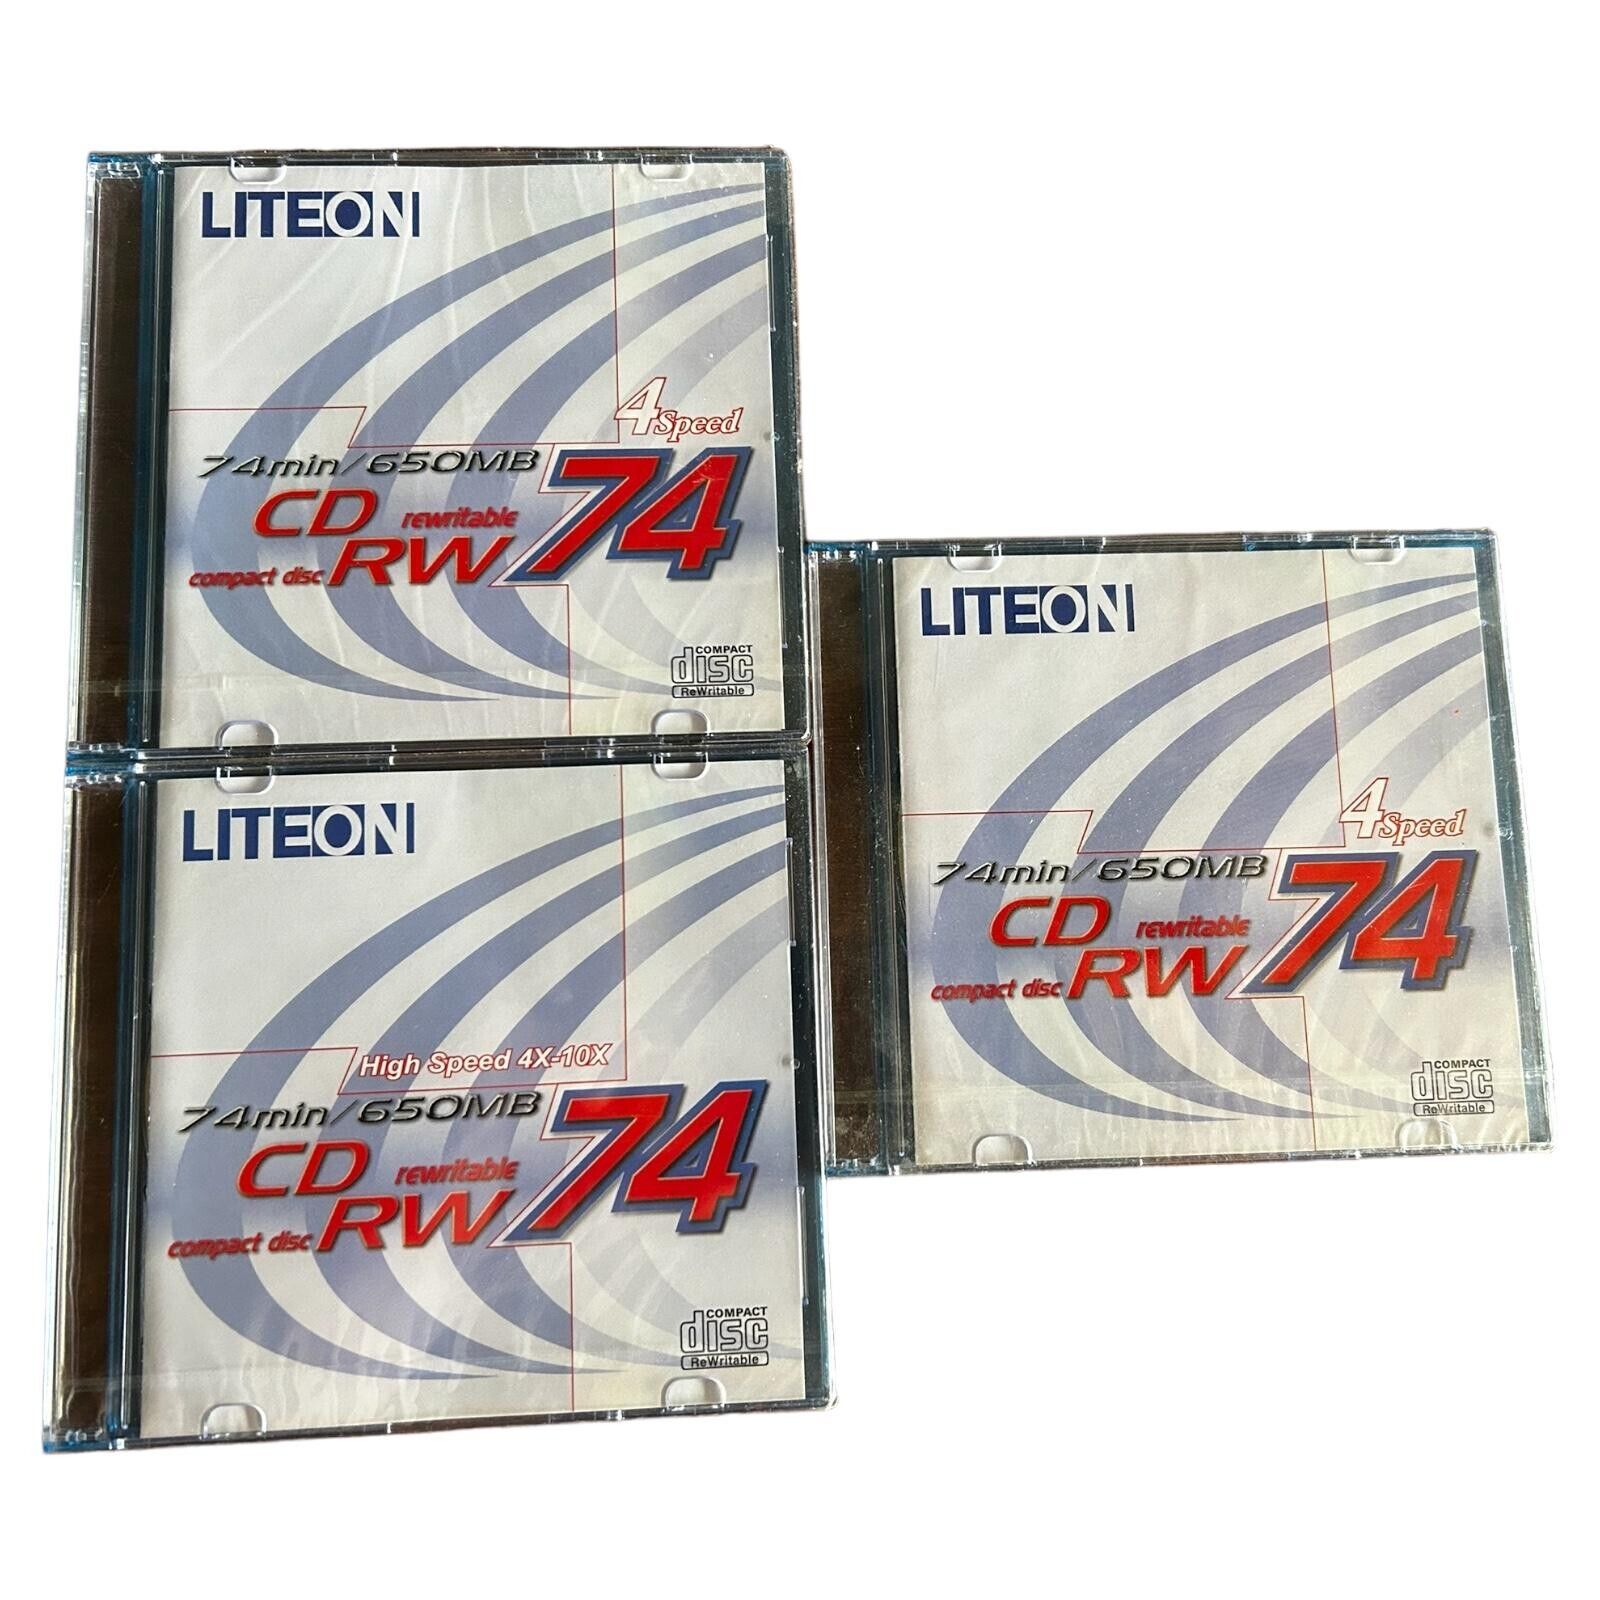 Liteon 74 CD-RW 650 mb Blank CD`s - Pack of 3